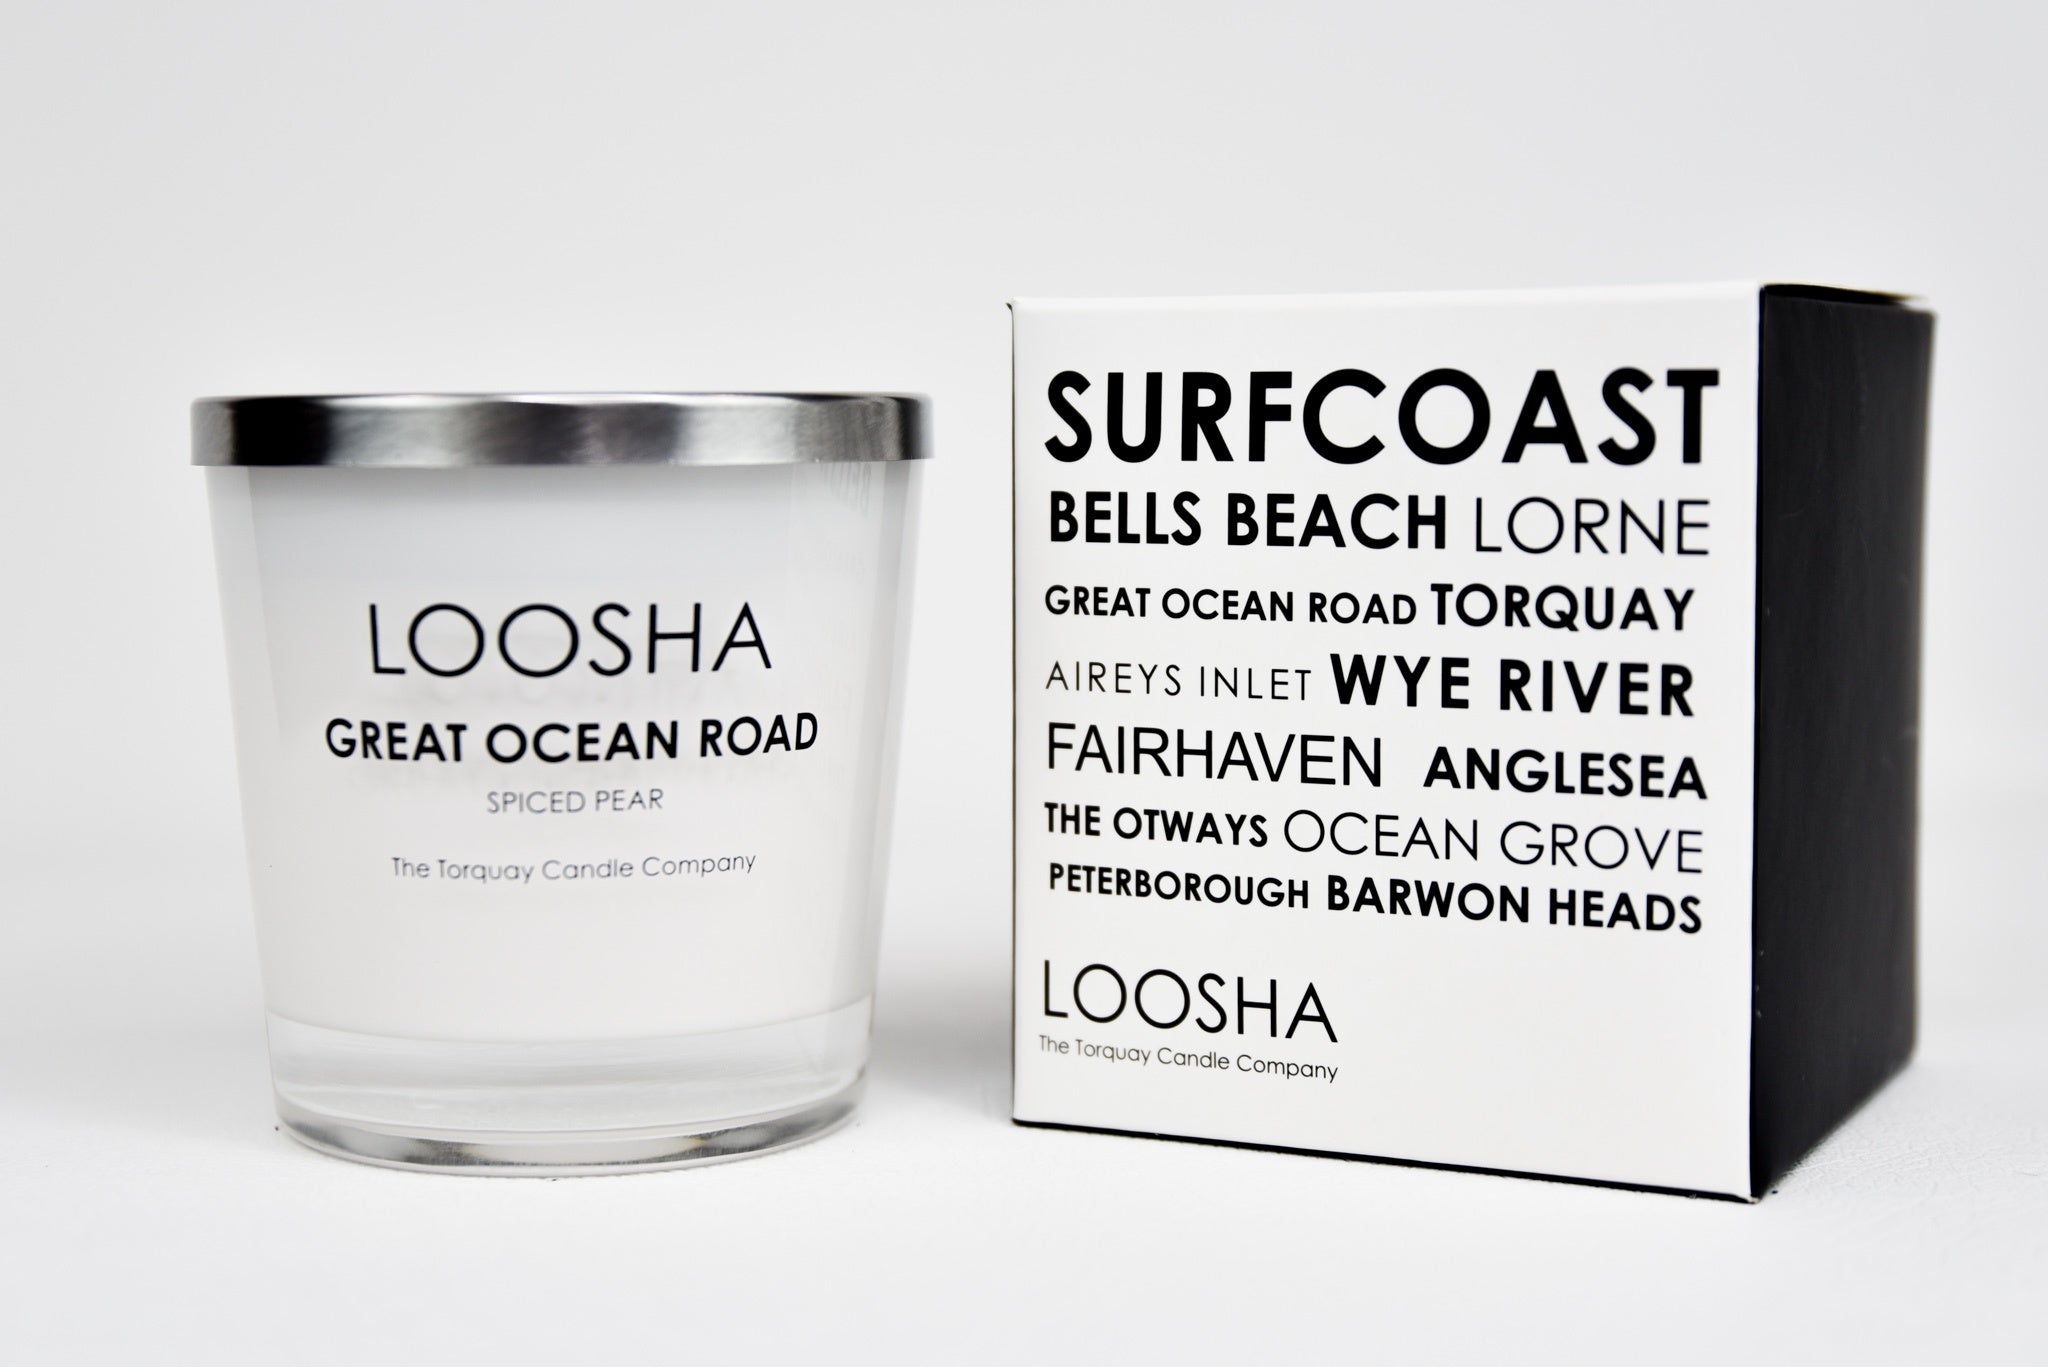 Loosha Surfcoast Candle